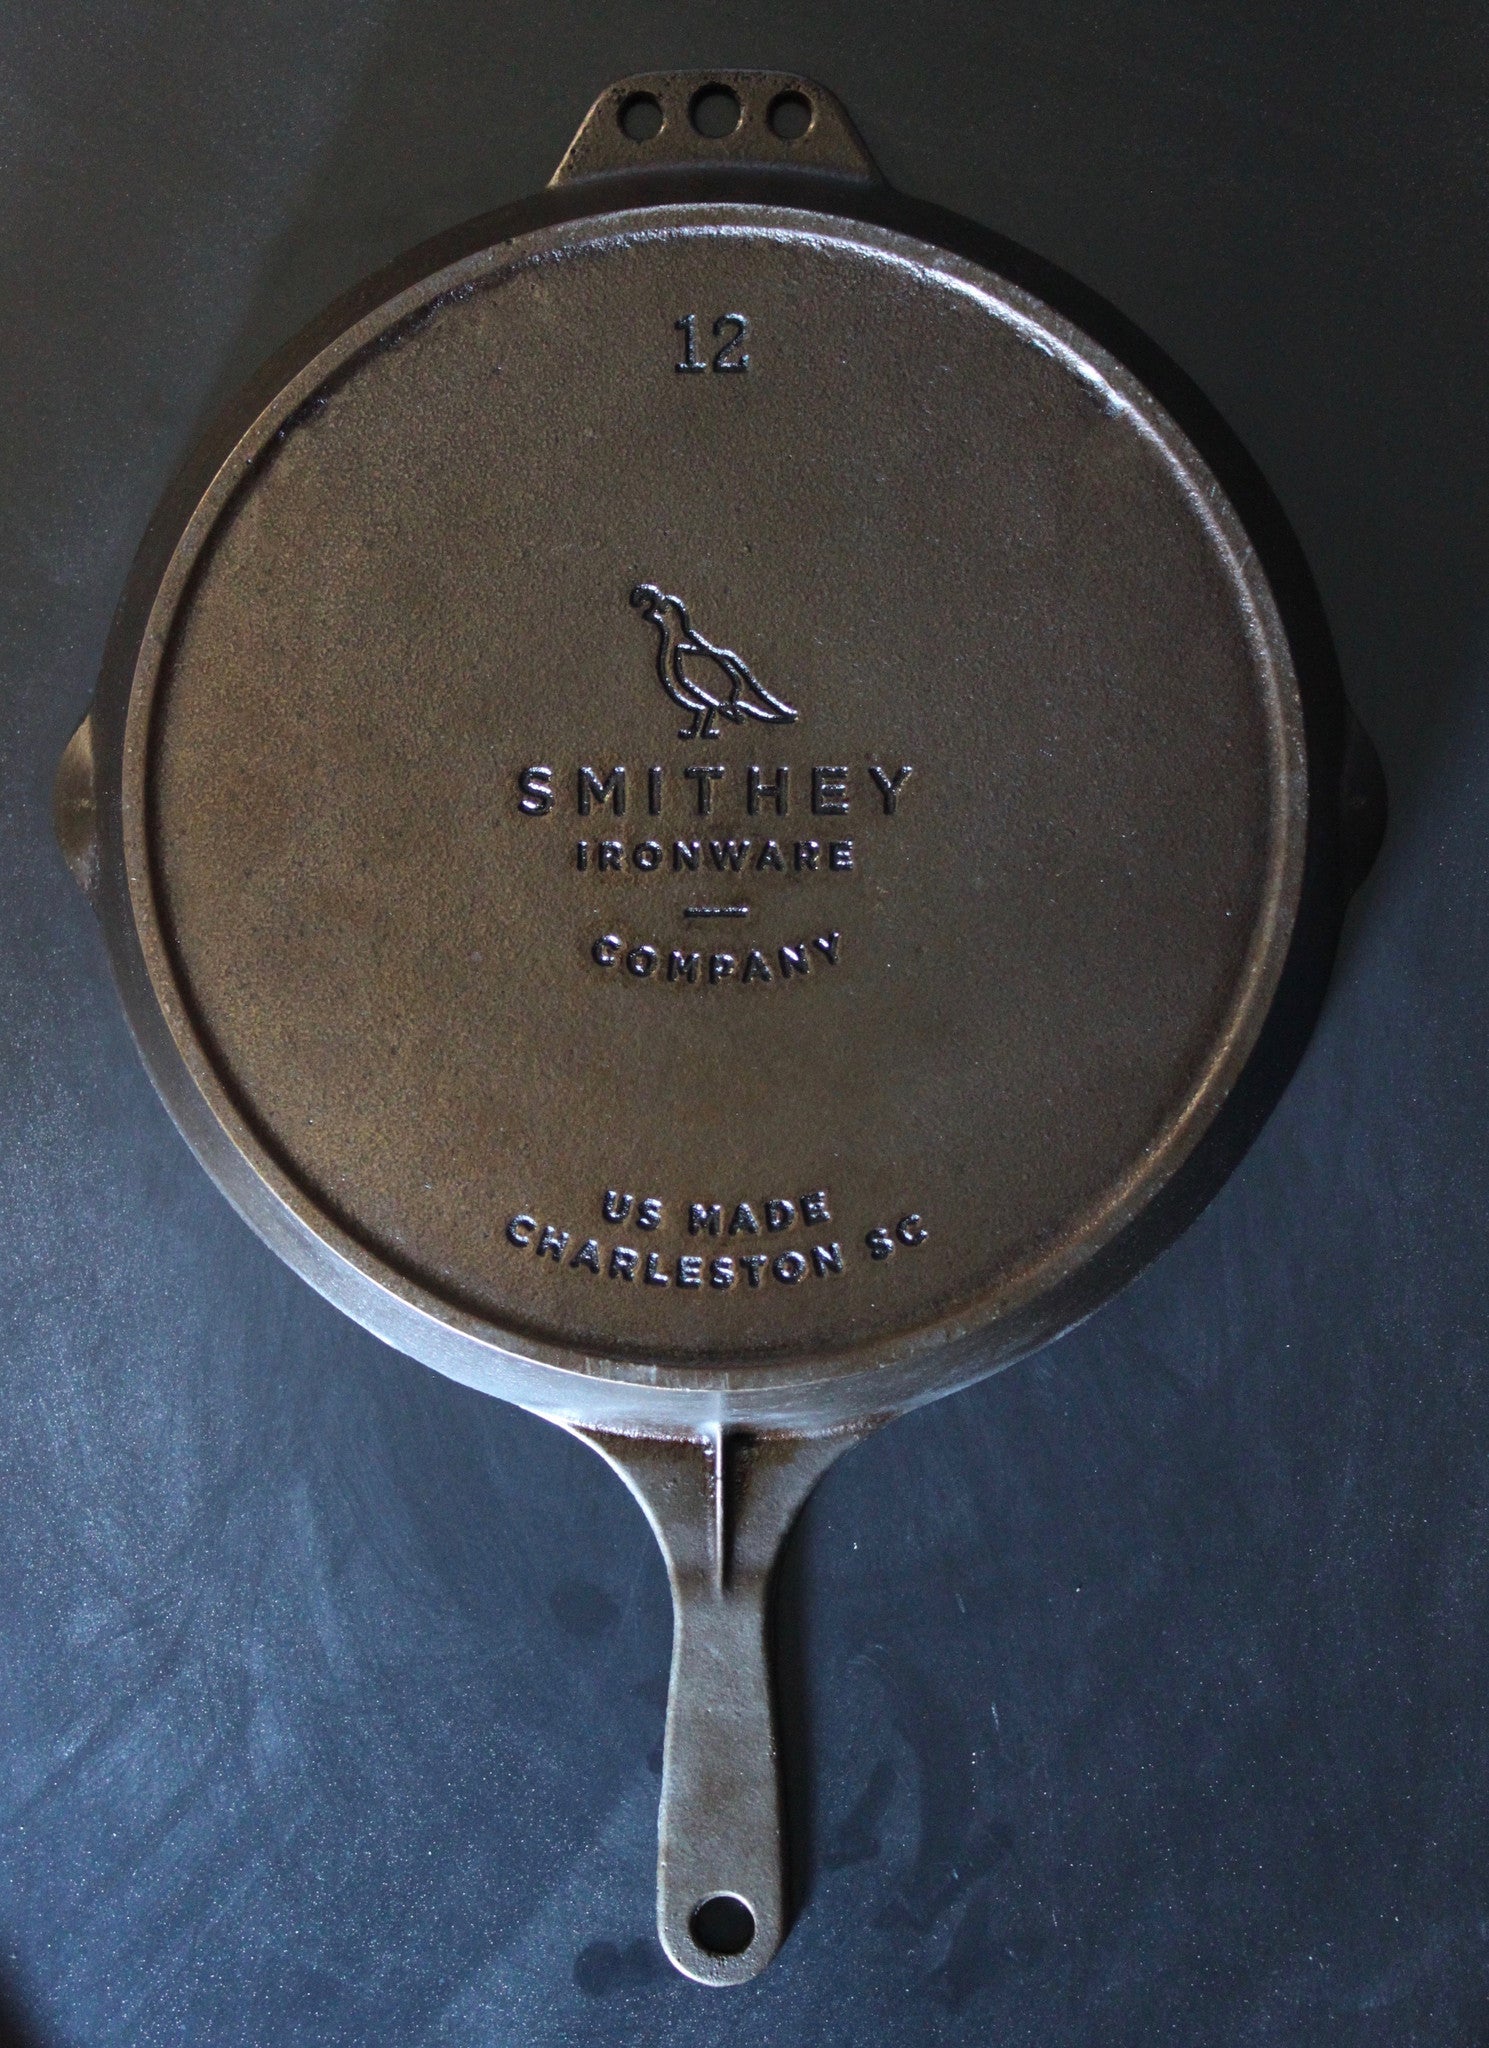 Smithey Ironware Co., Cast Iron Skillet